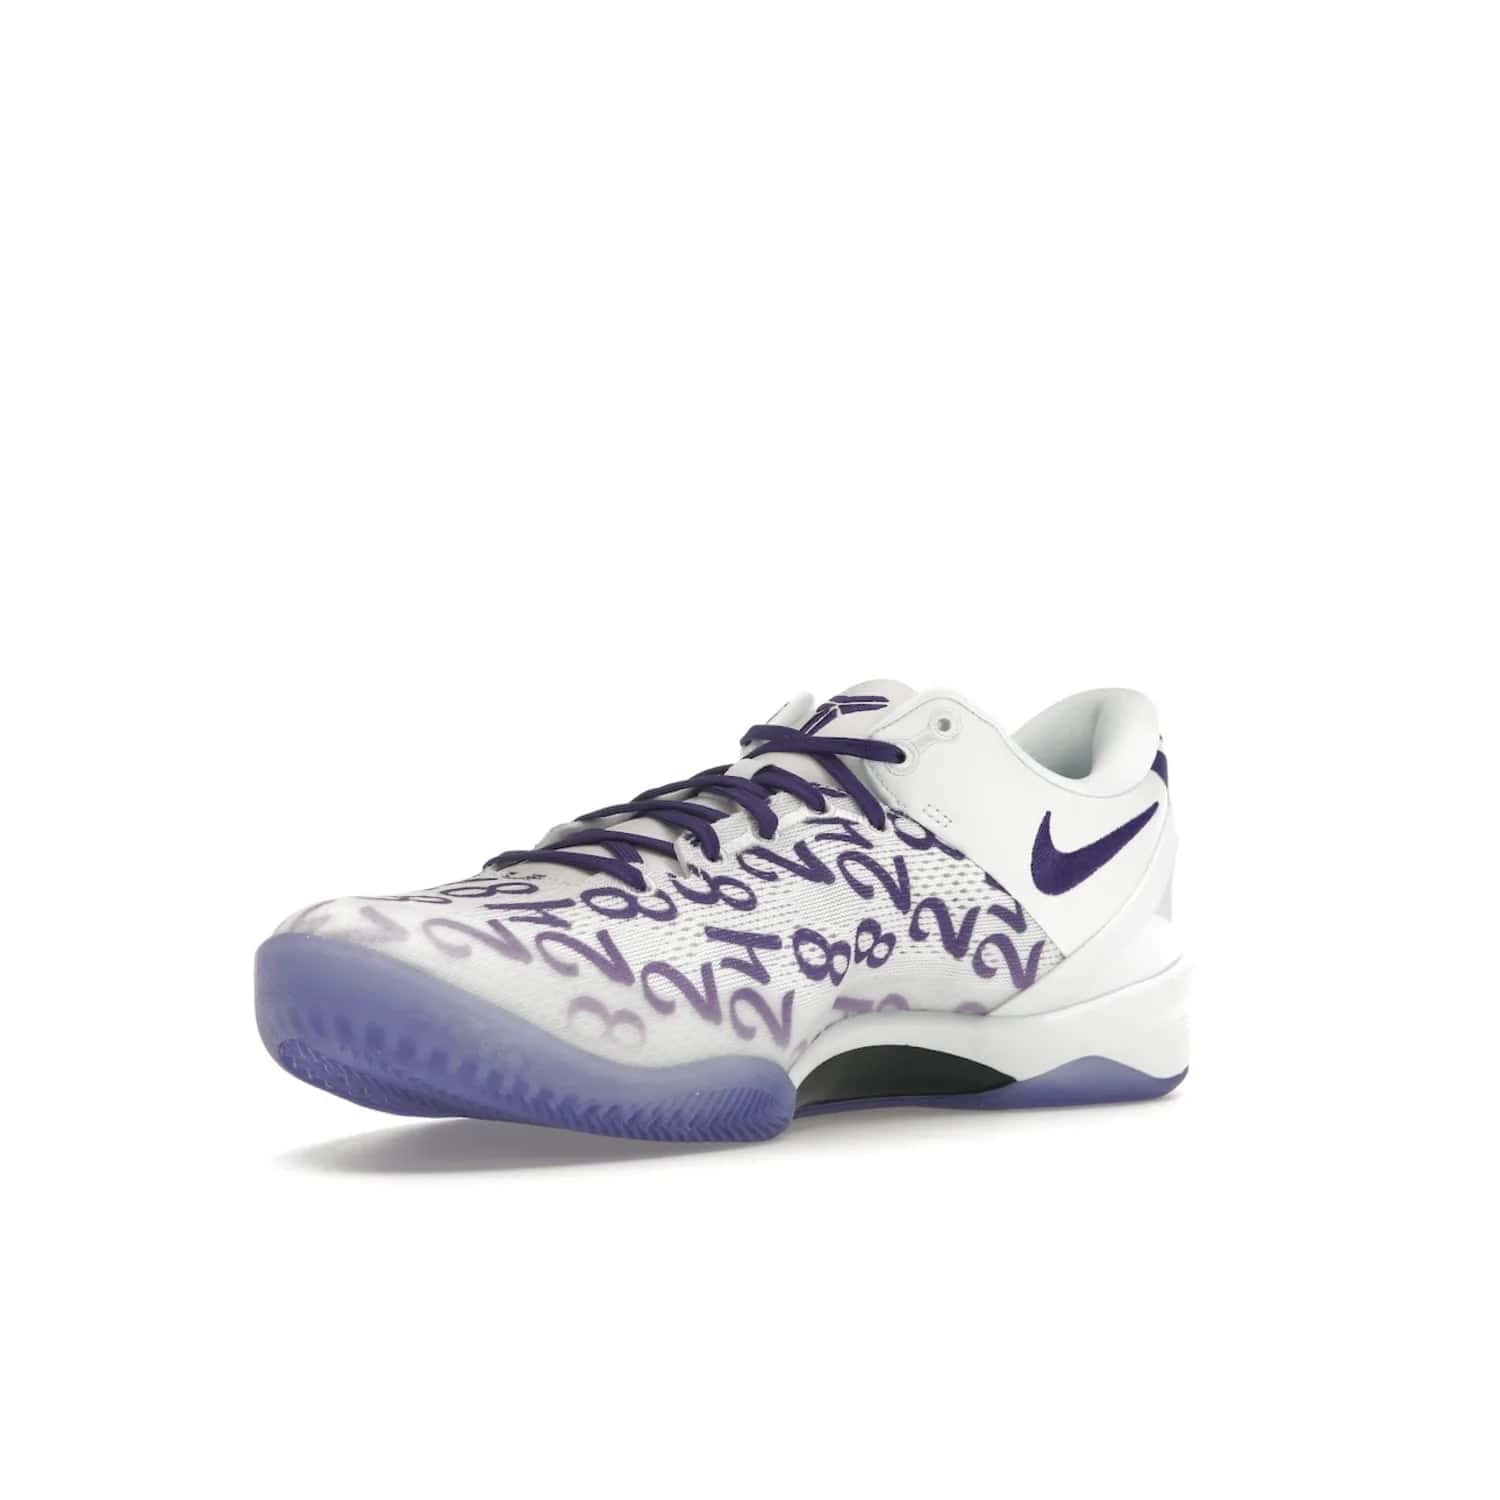 Nike Kobe 8 Protro Court Purple - Image 15 - Only at www.BallersClubKickz.com - 